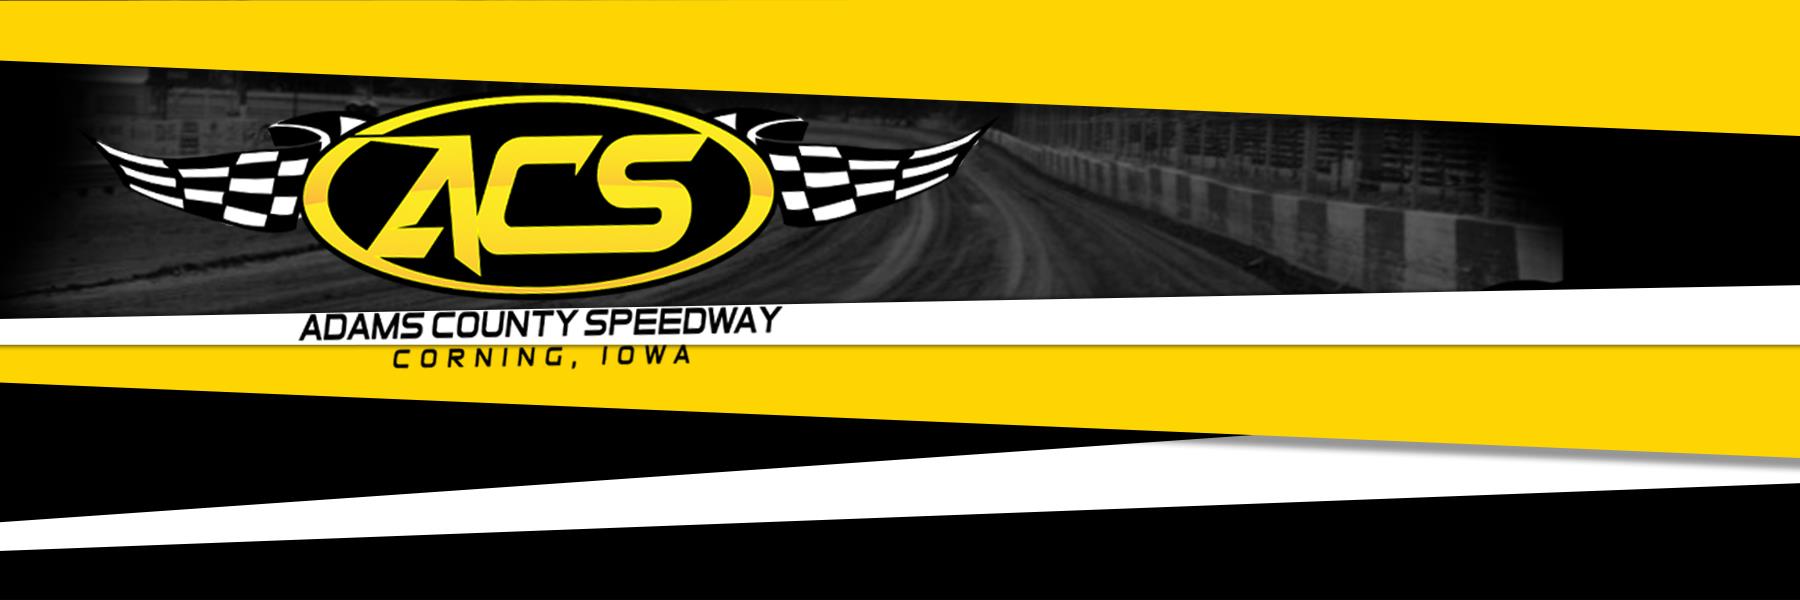 5/15/2021 - Adams County Speedway